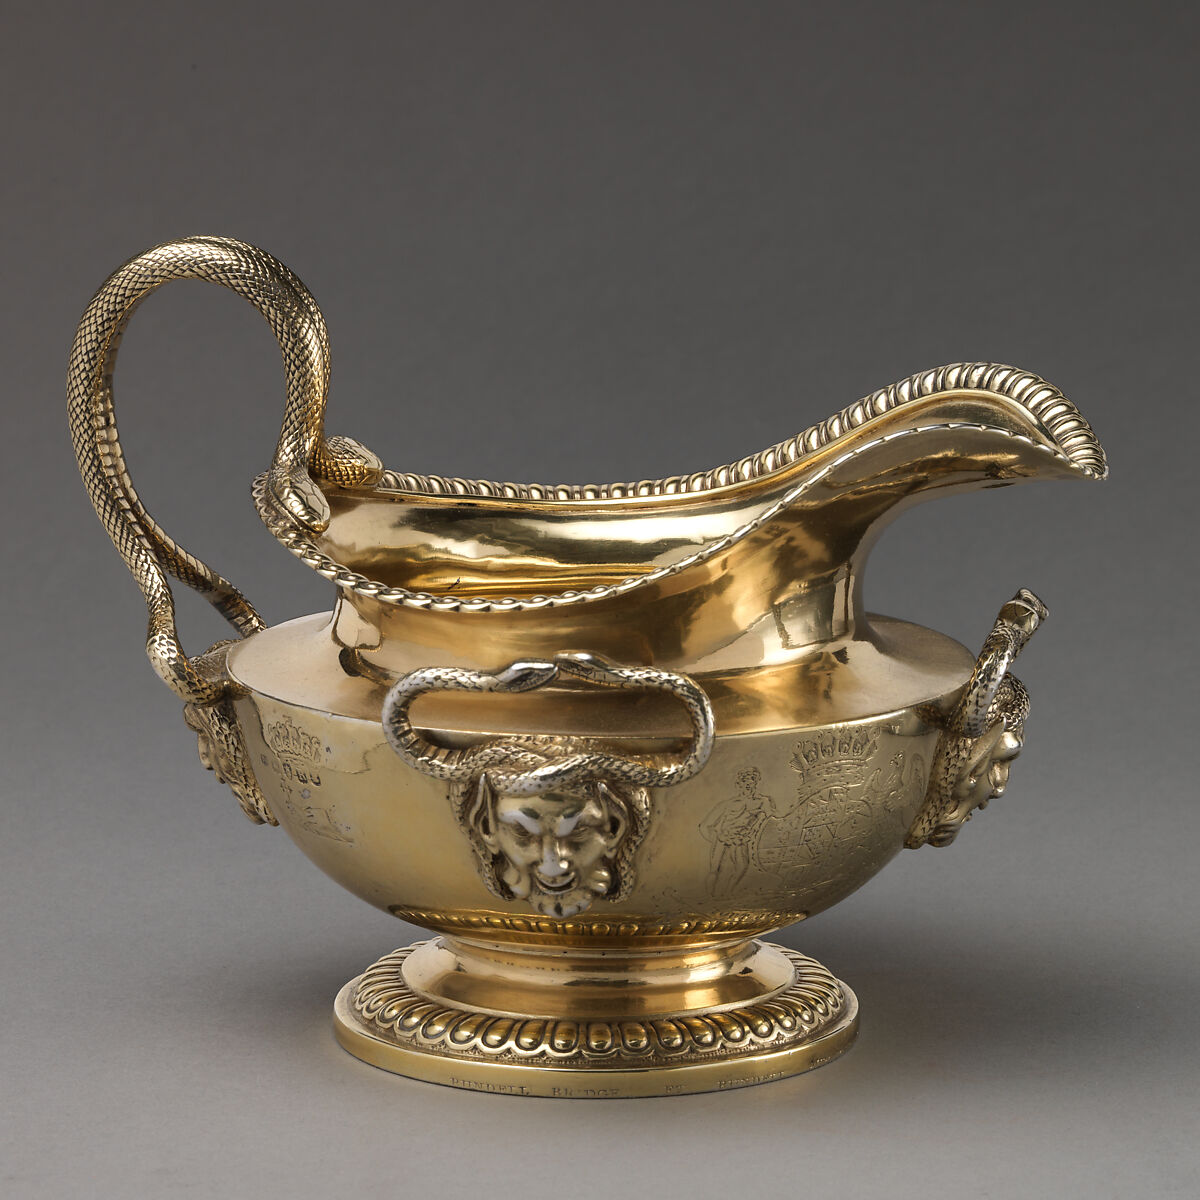 Cream jug (part of a set), Paul Storr (British, 1771–1844), Silver-gilt, British, London 